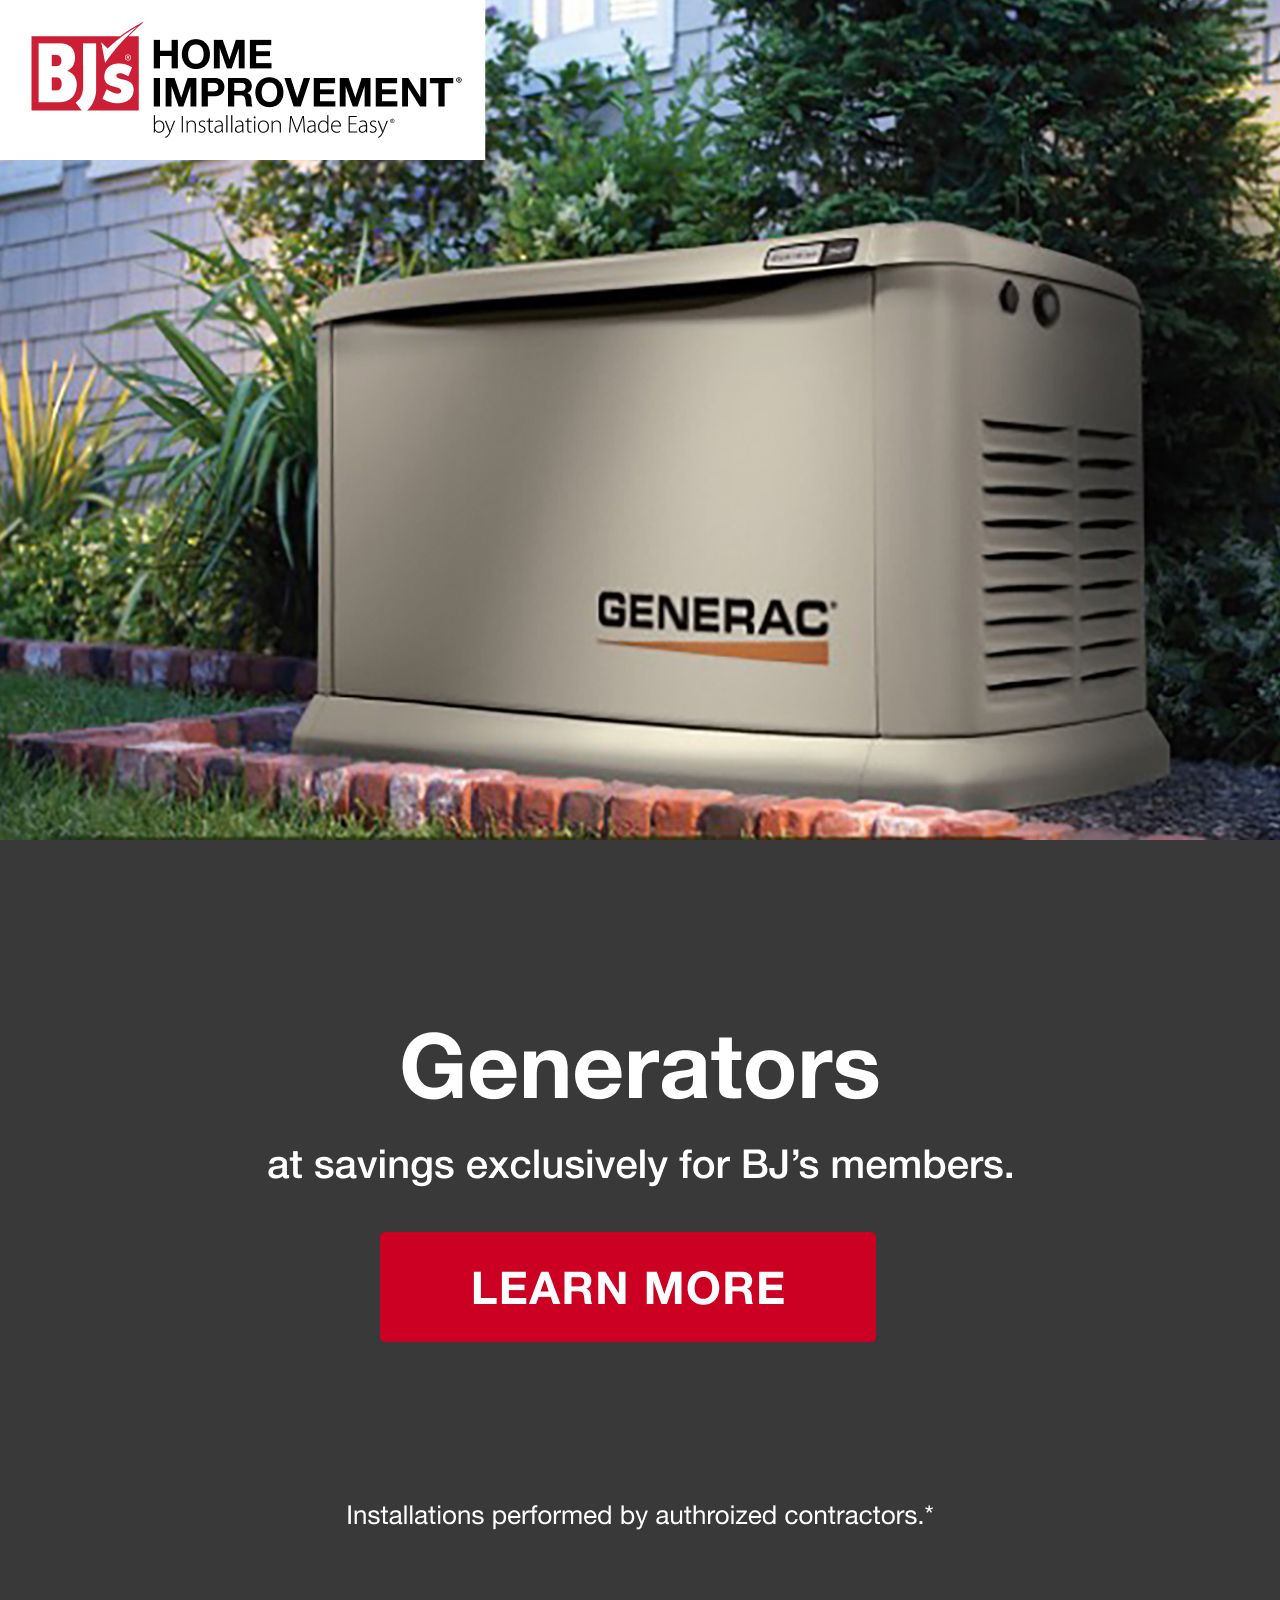 Home Improvement: Generators. Click to learn more